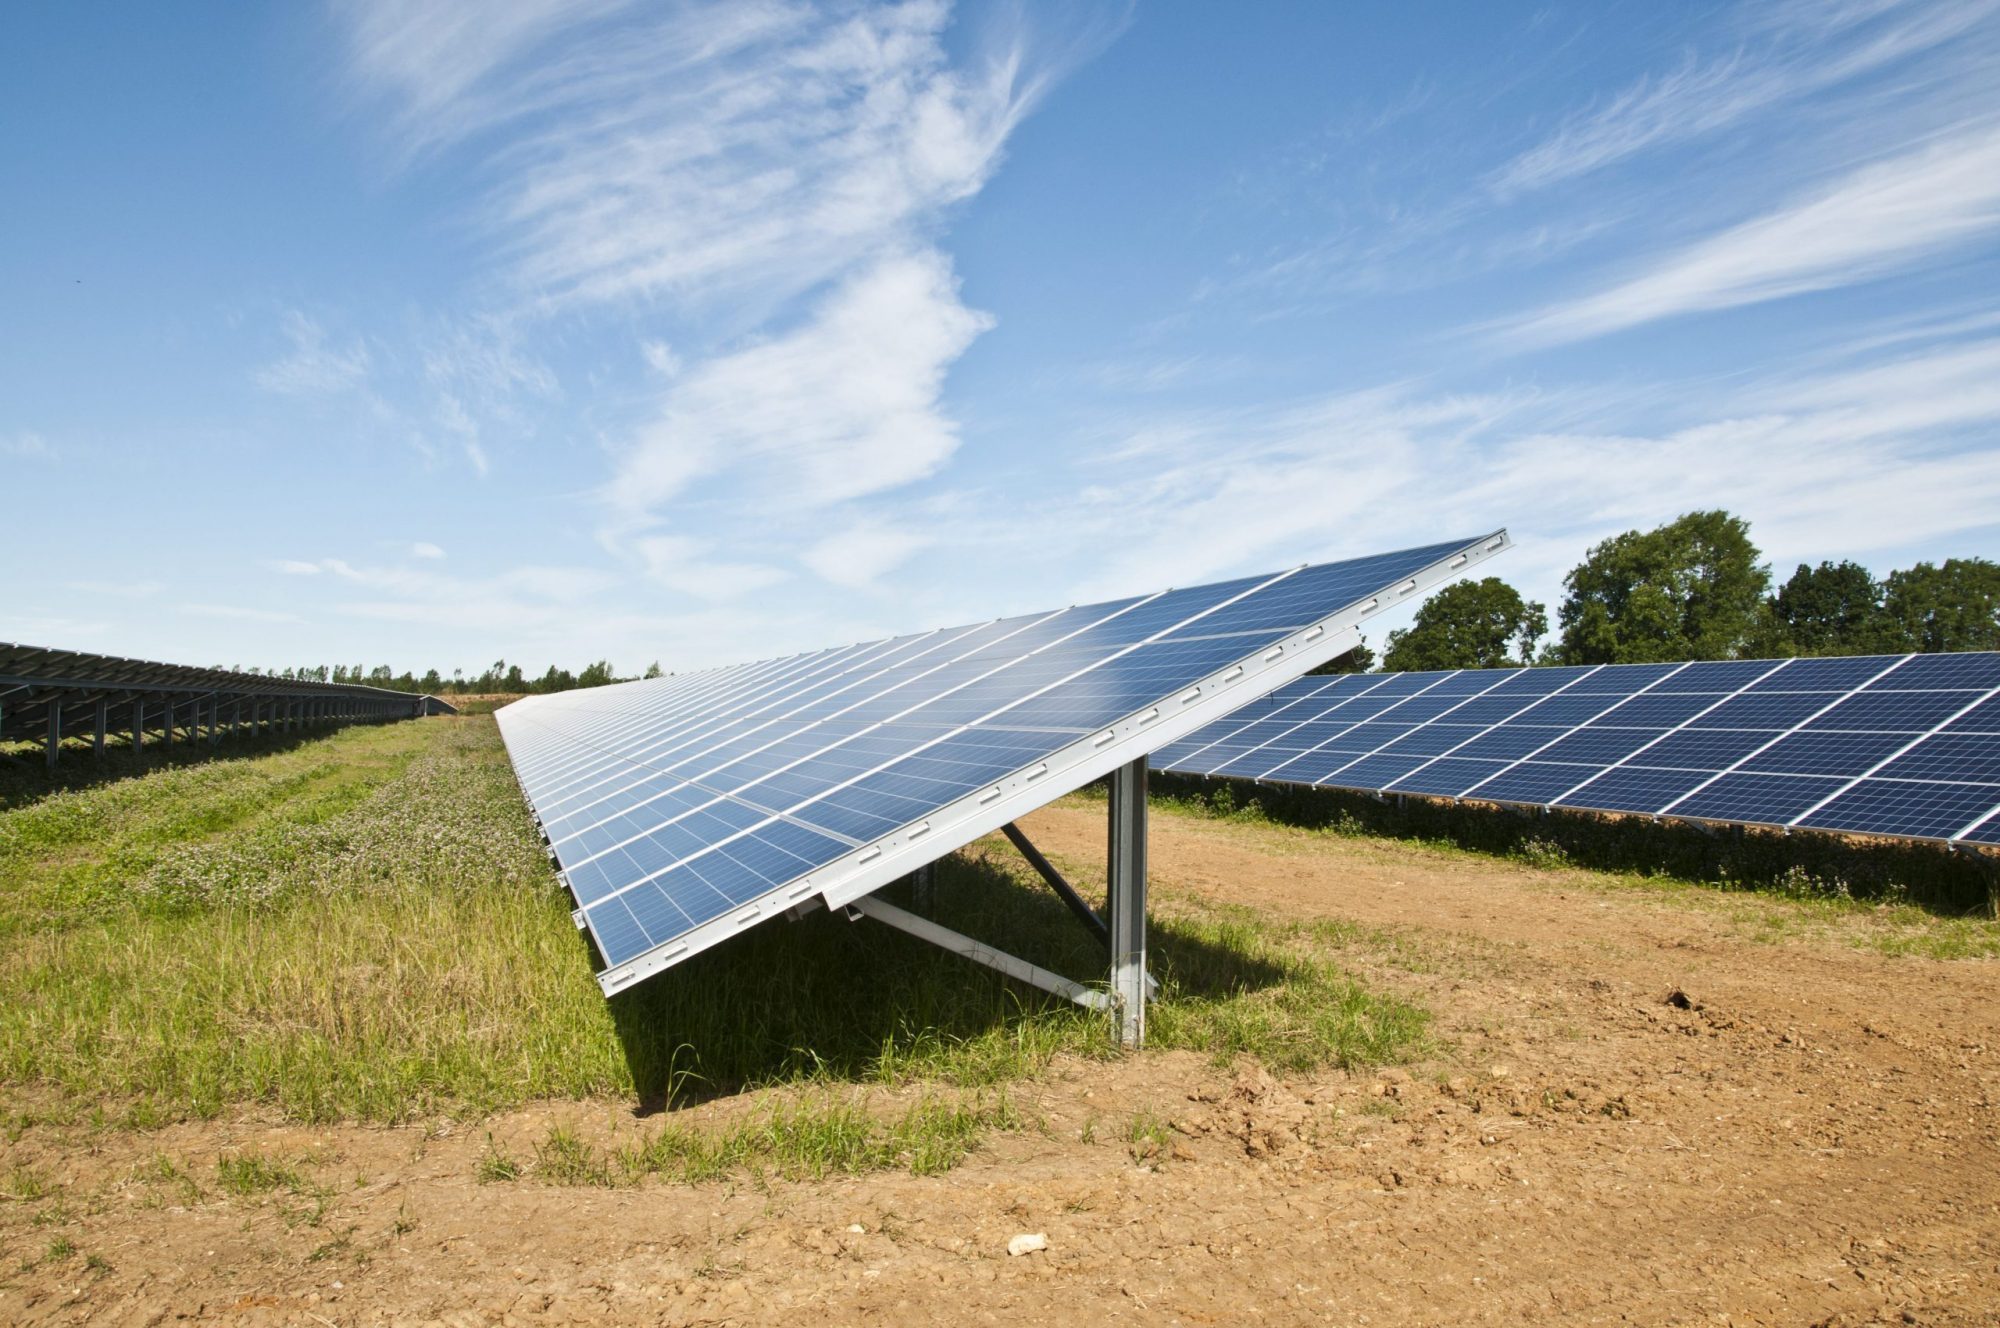 Gawcott Fields Community Solar